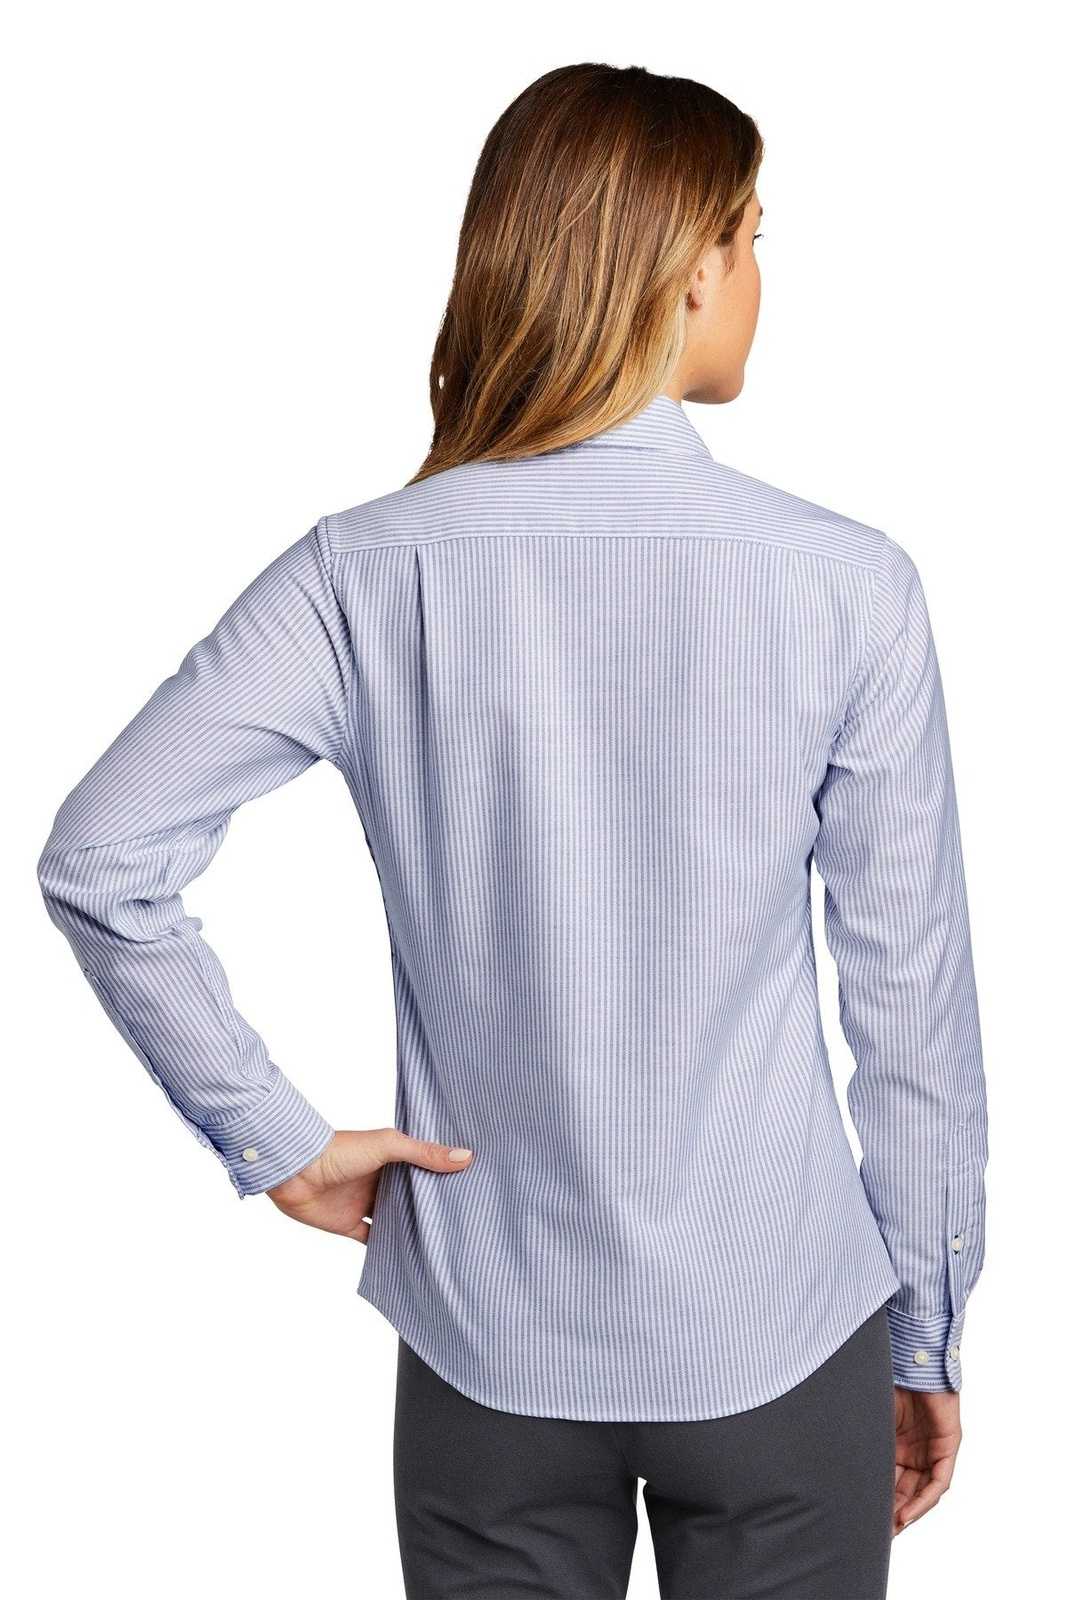 Port Authority LW657 Ladies SuperPro Oxford Stripe Shirt - Oxford Blue/ White - HIT a Double - 2